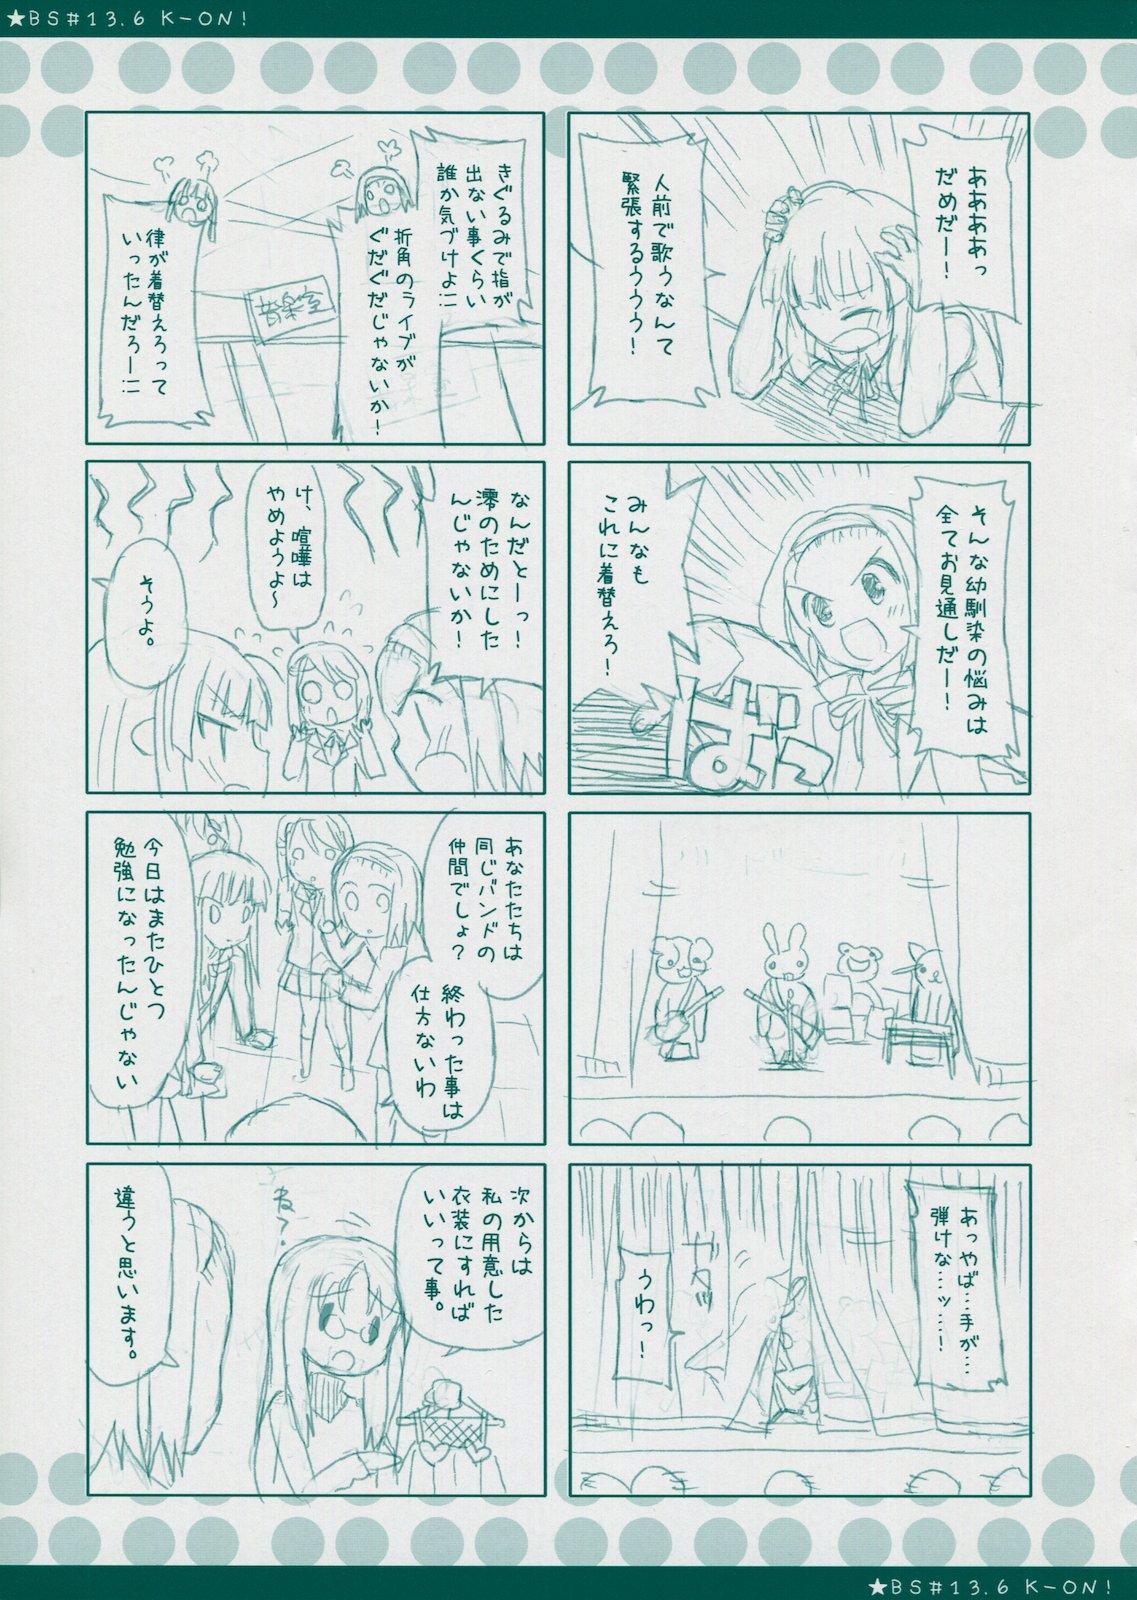 Hair BS#13.9 Keion no Rakugaki Bon 2 - K-on Safada - Page 11